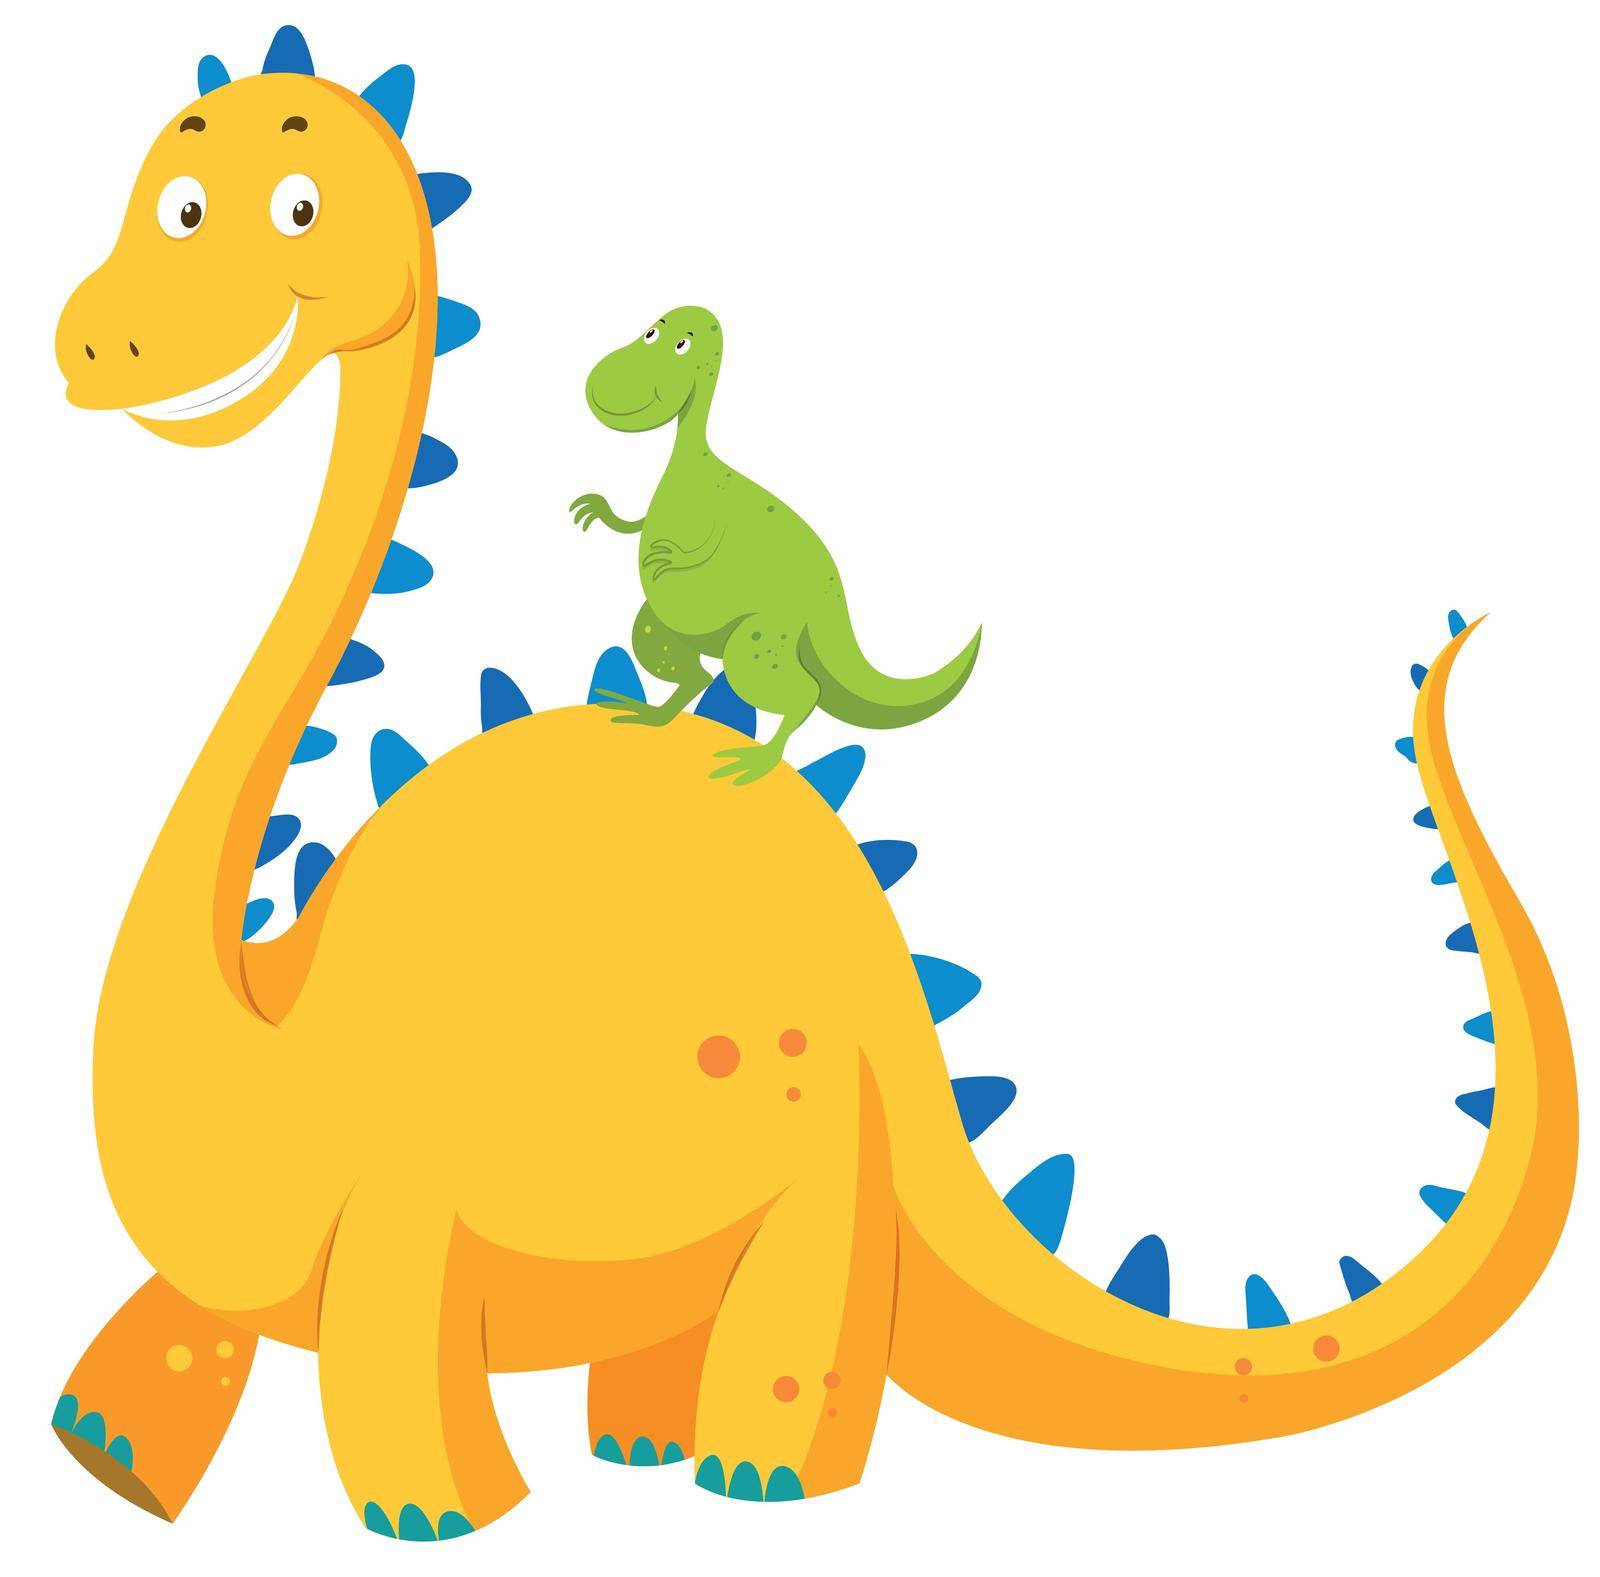 Big dinosaur and small dinosaur by iimages